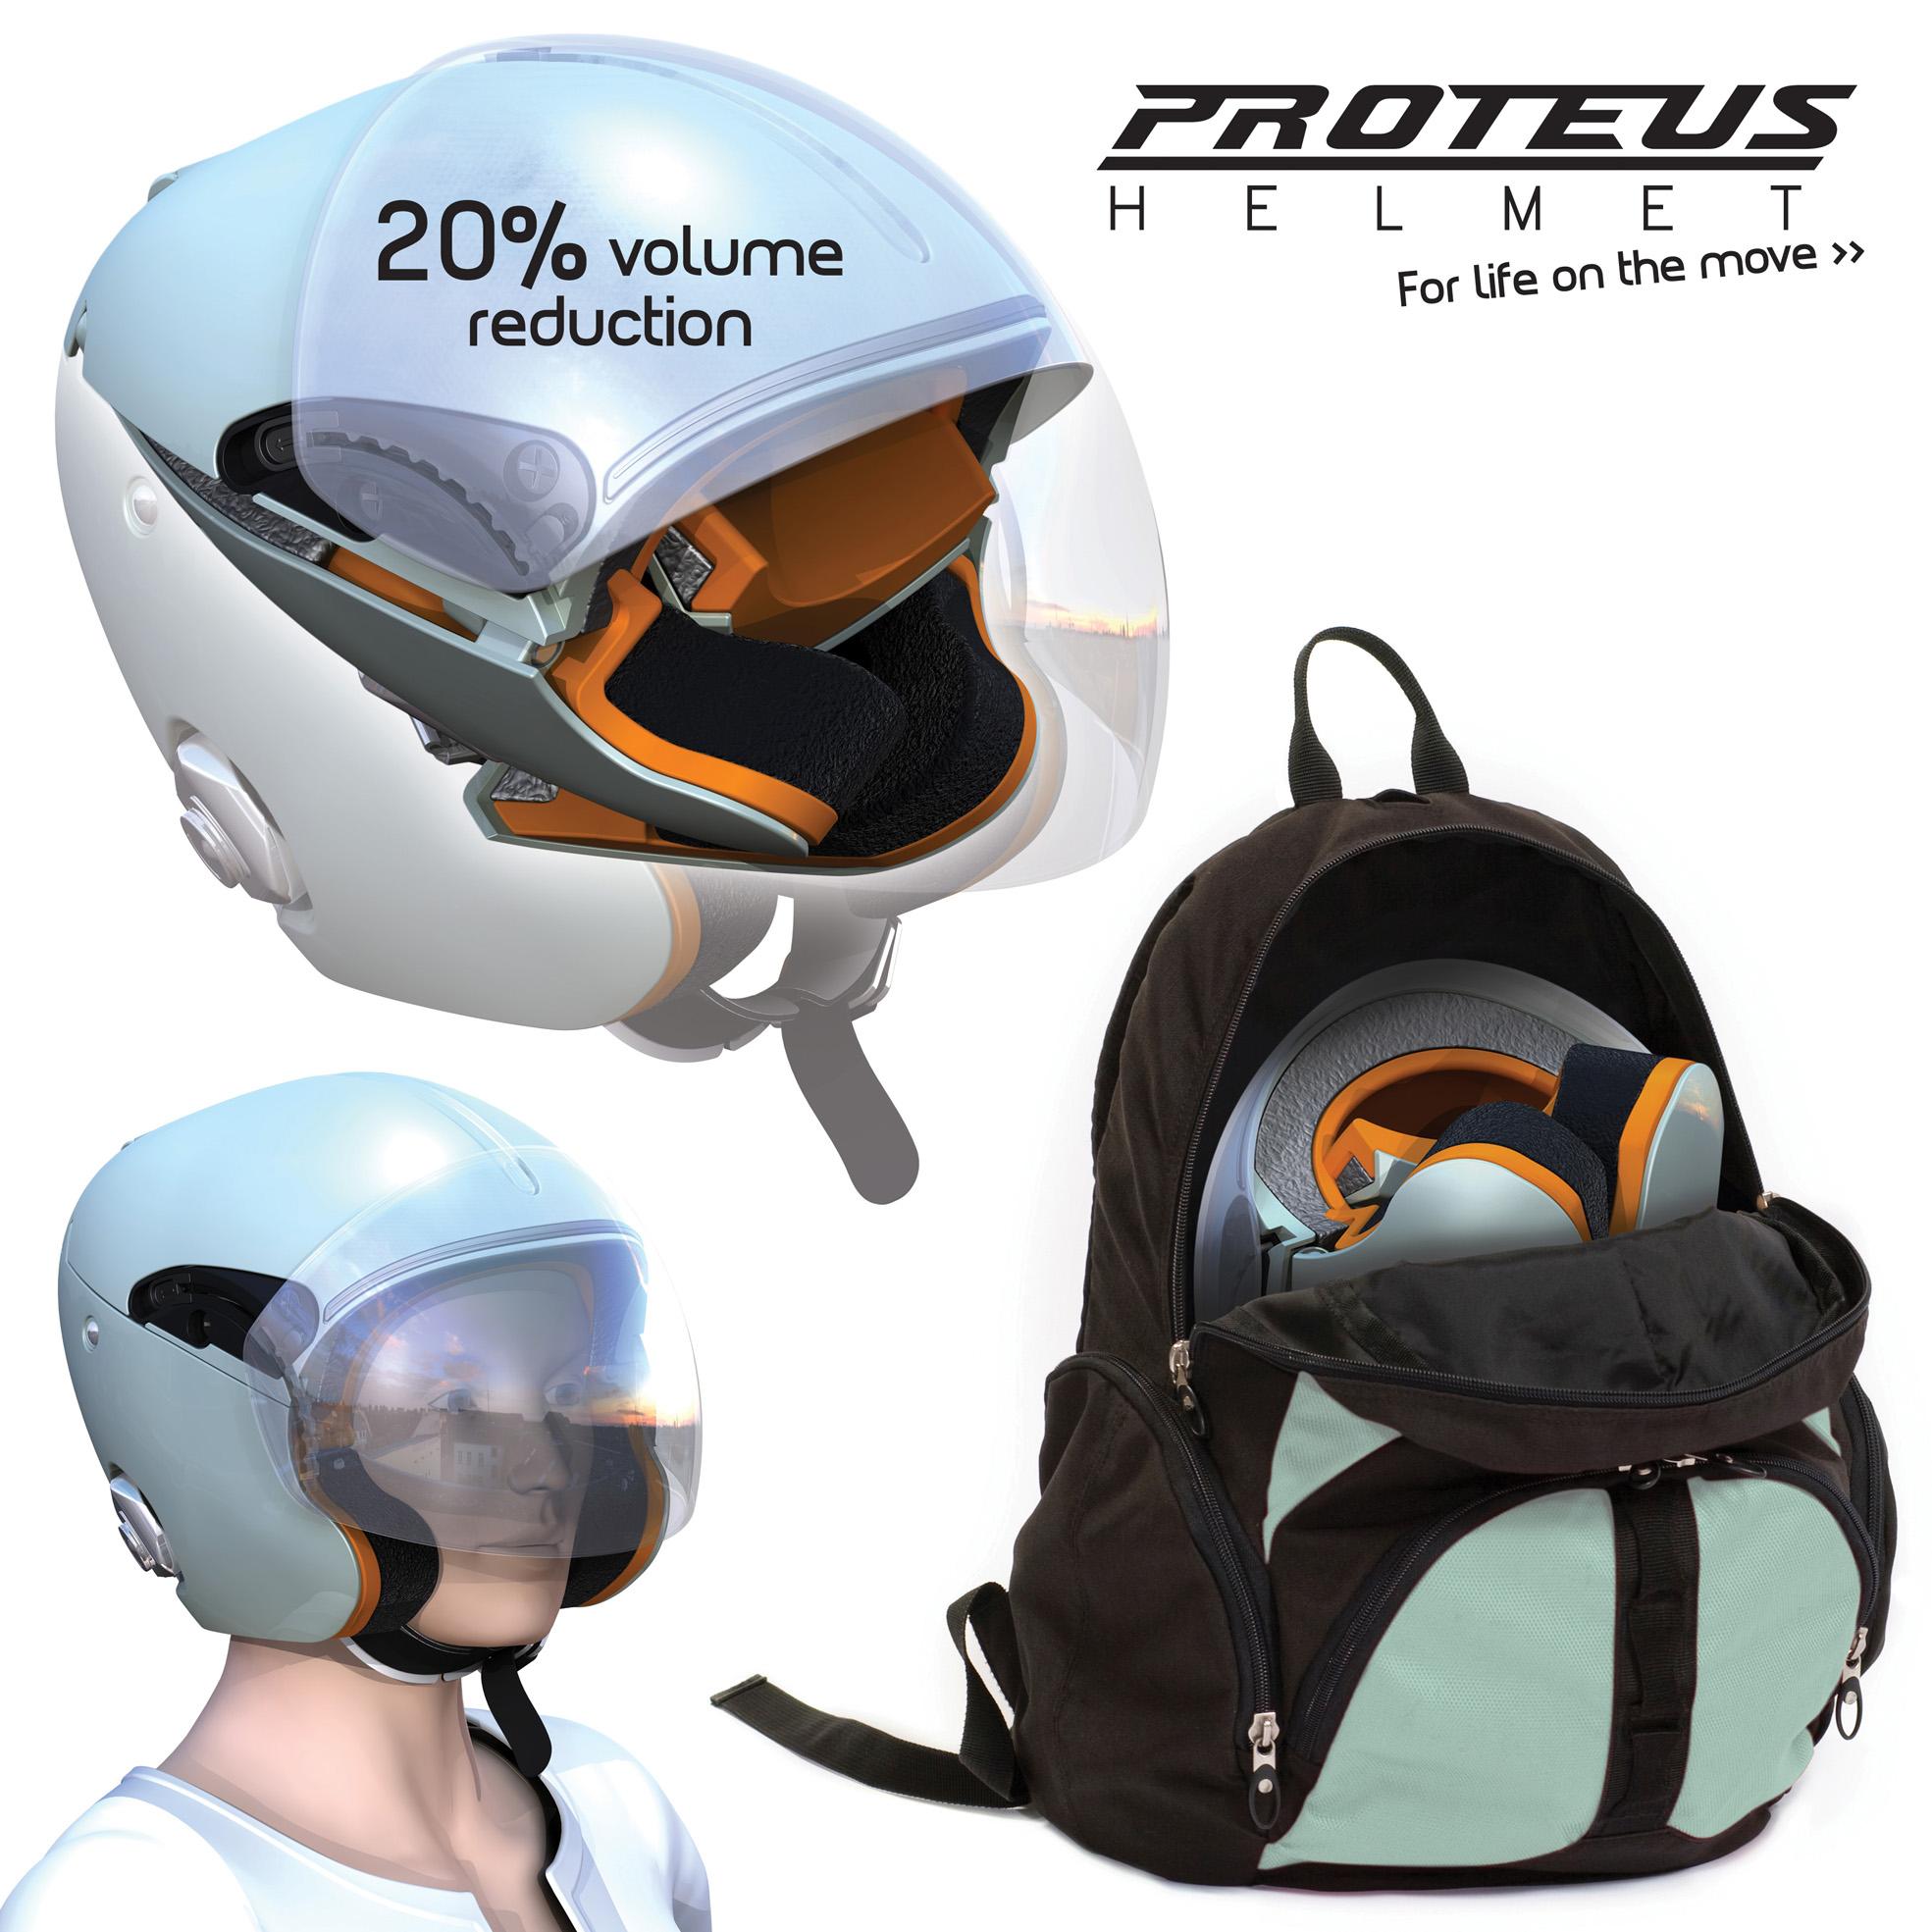 Proteus Helmet Folds For Storing In A Bag